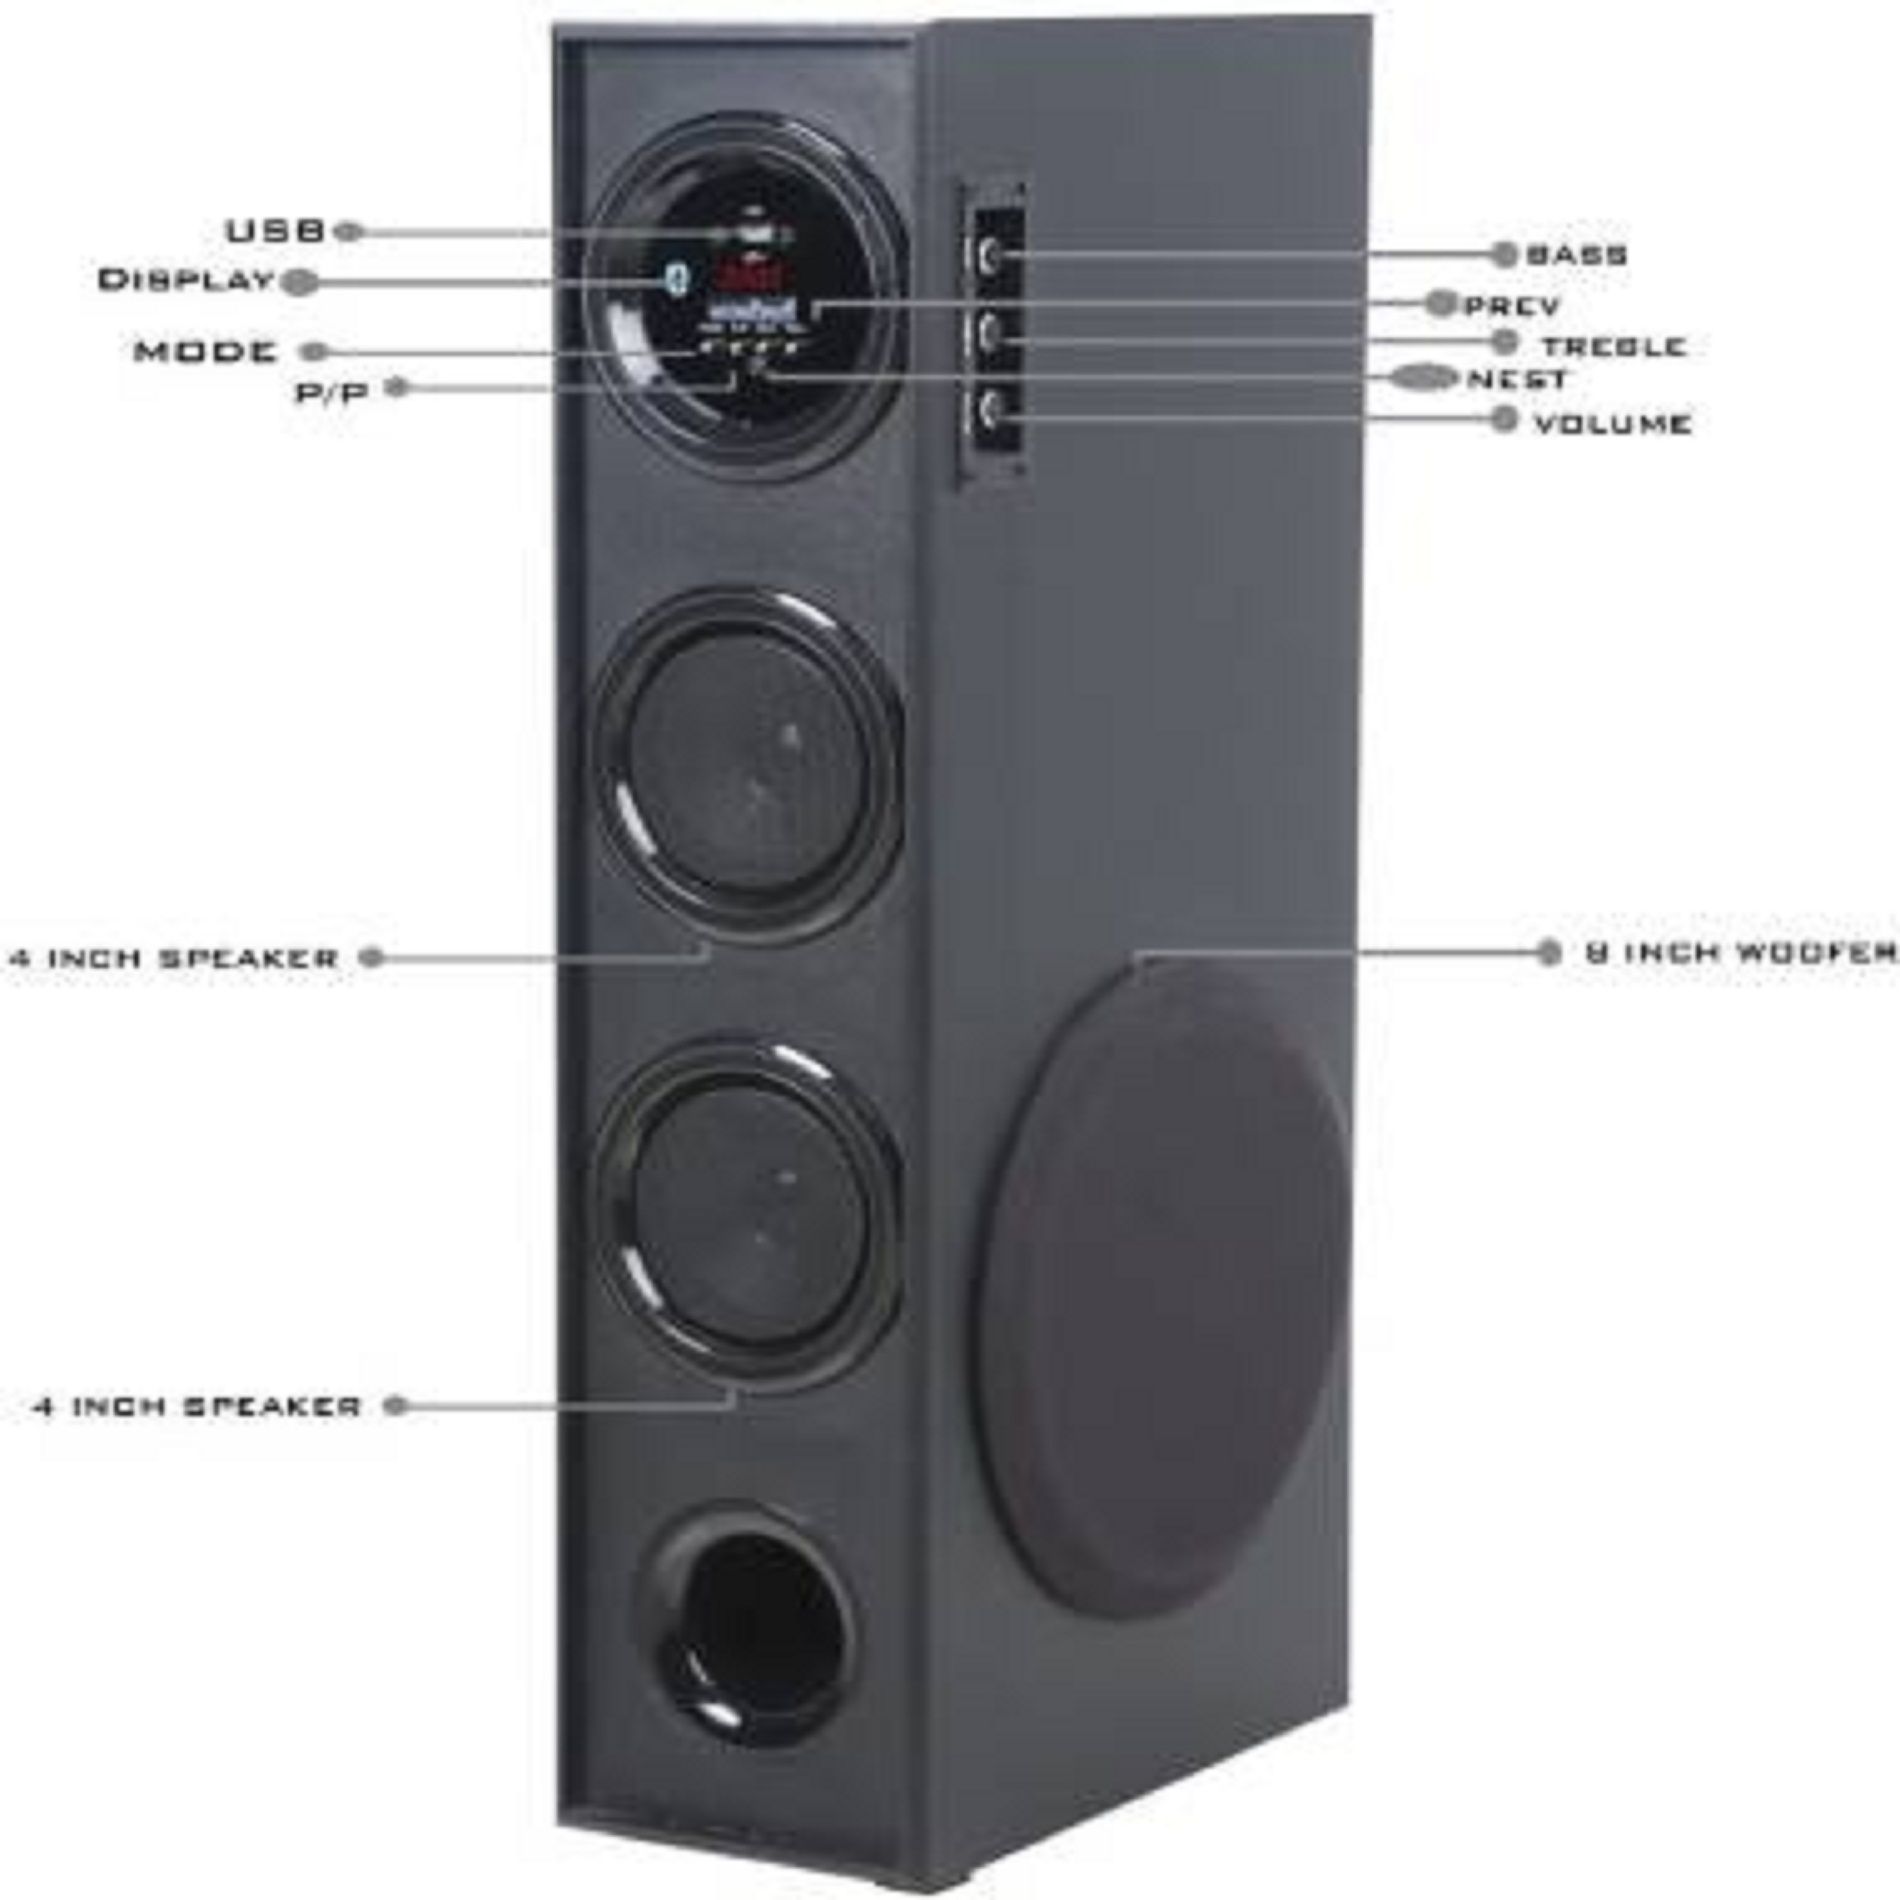 Krisons sound blaster Tower Speakers - Black